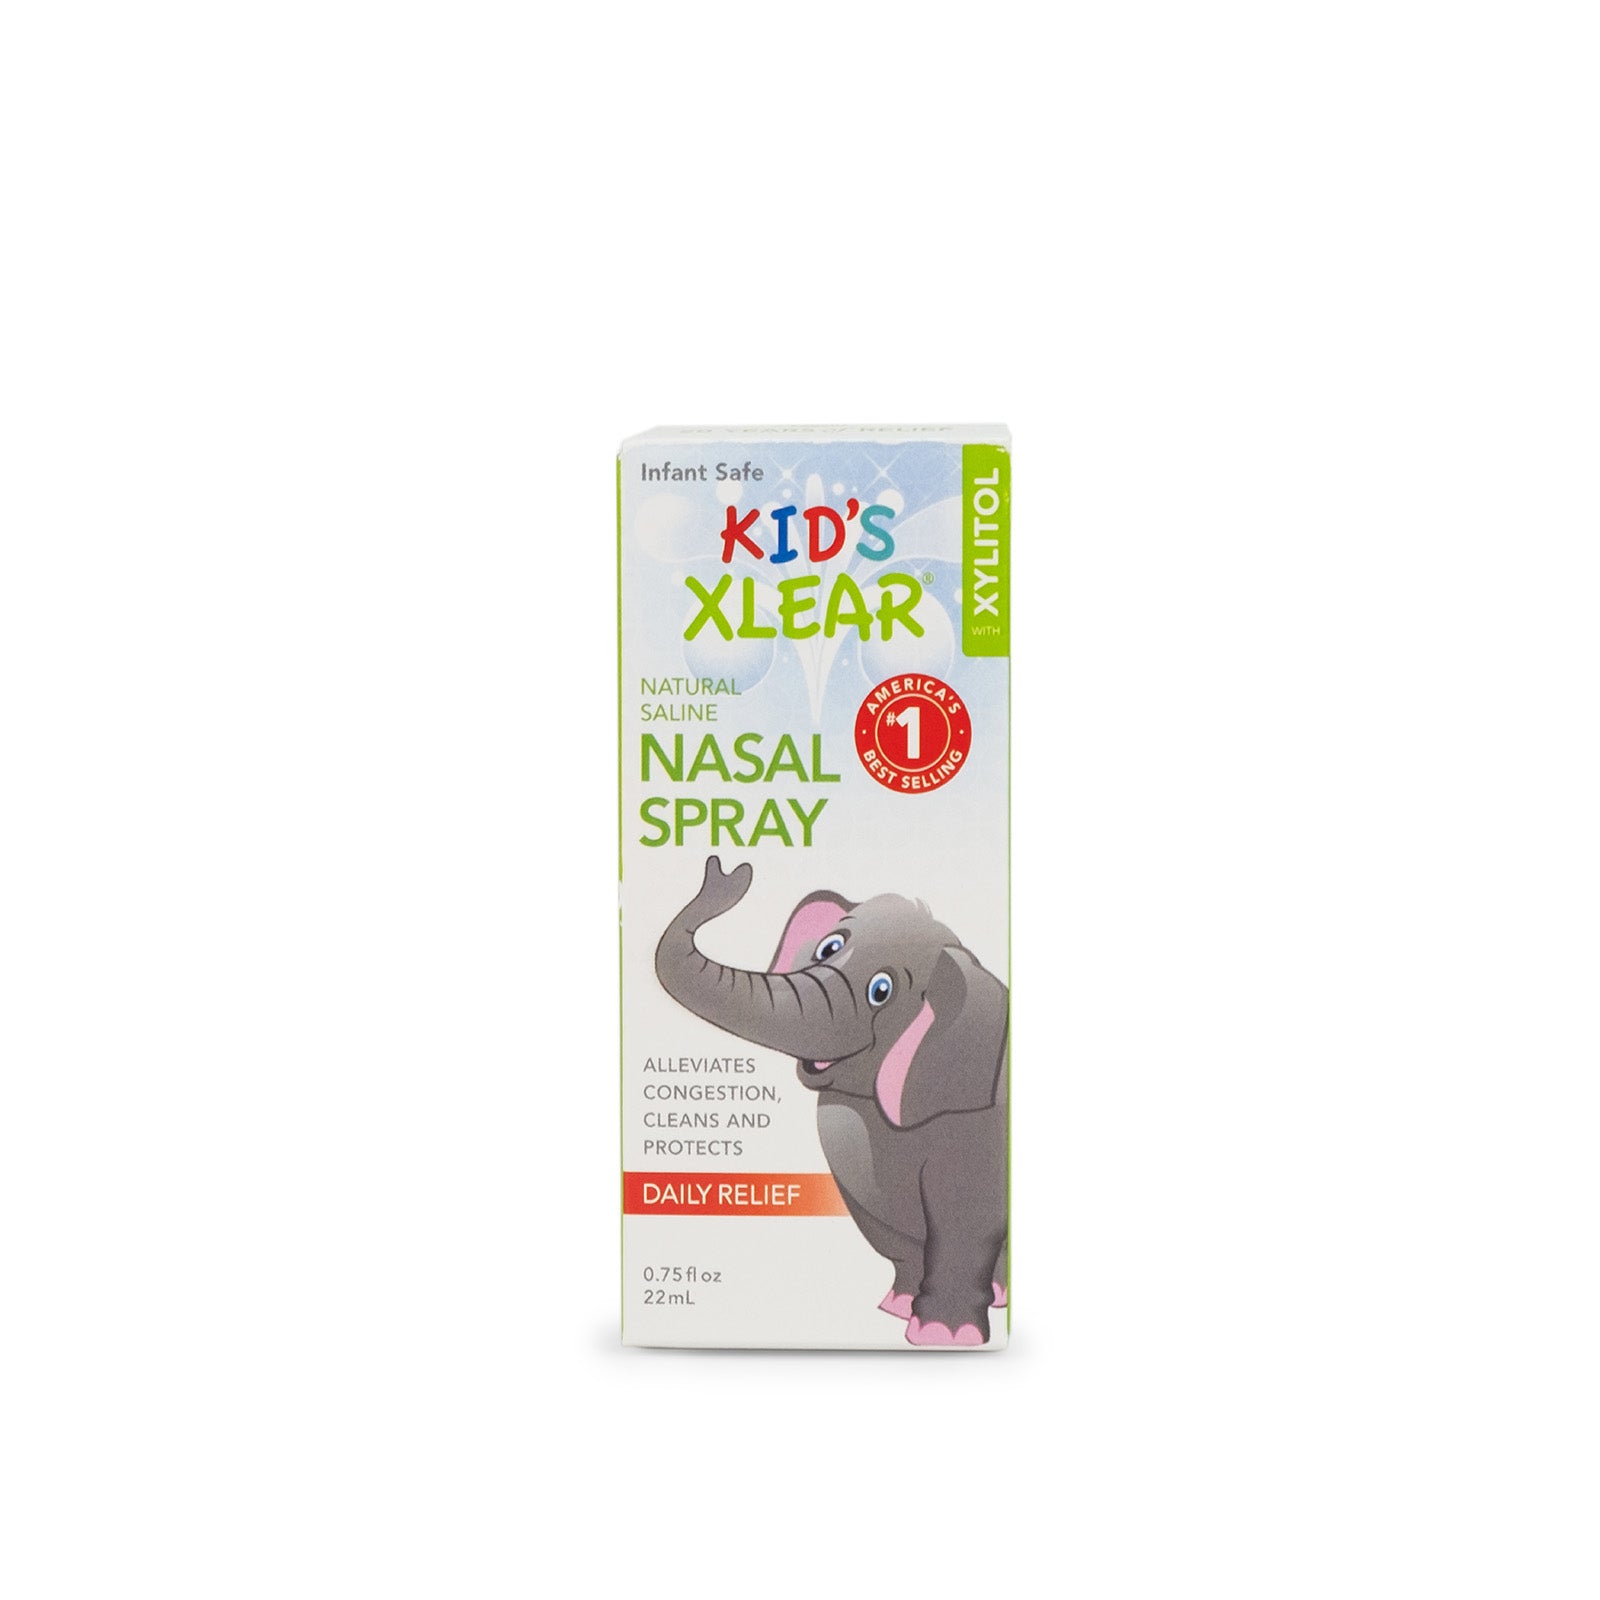 Xlear Kids Natural Saline Sinus Nasal Spray 22ml (0.75 Fl Oz)